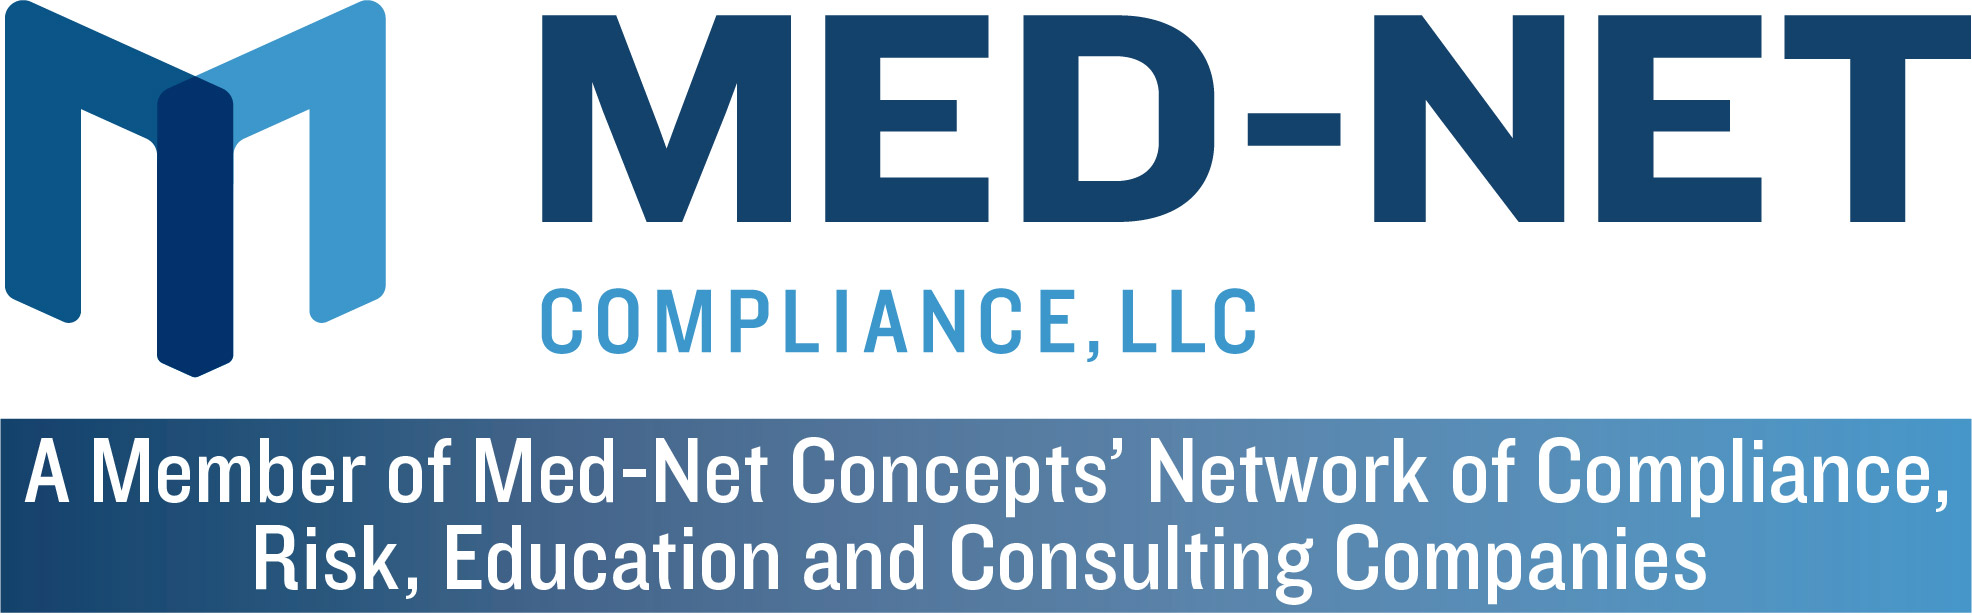 Net Compliance, LLC.